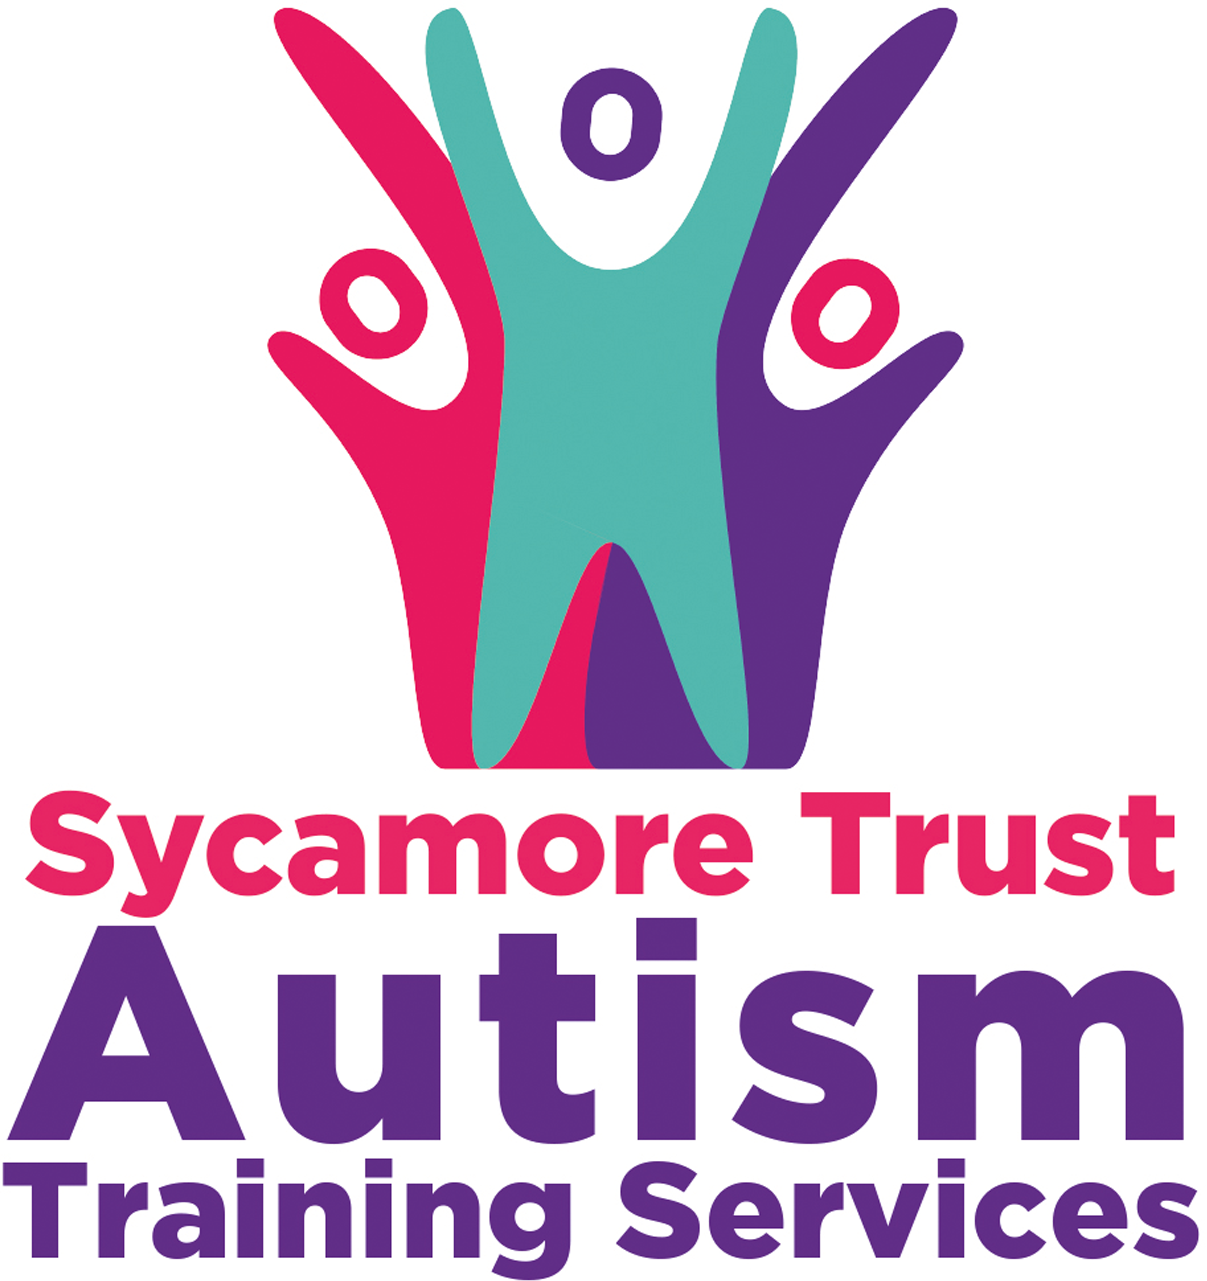 Sycamore Trust Autism Training Services logo